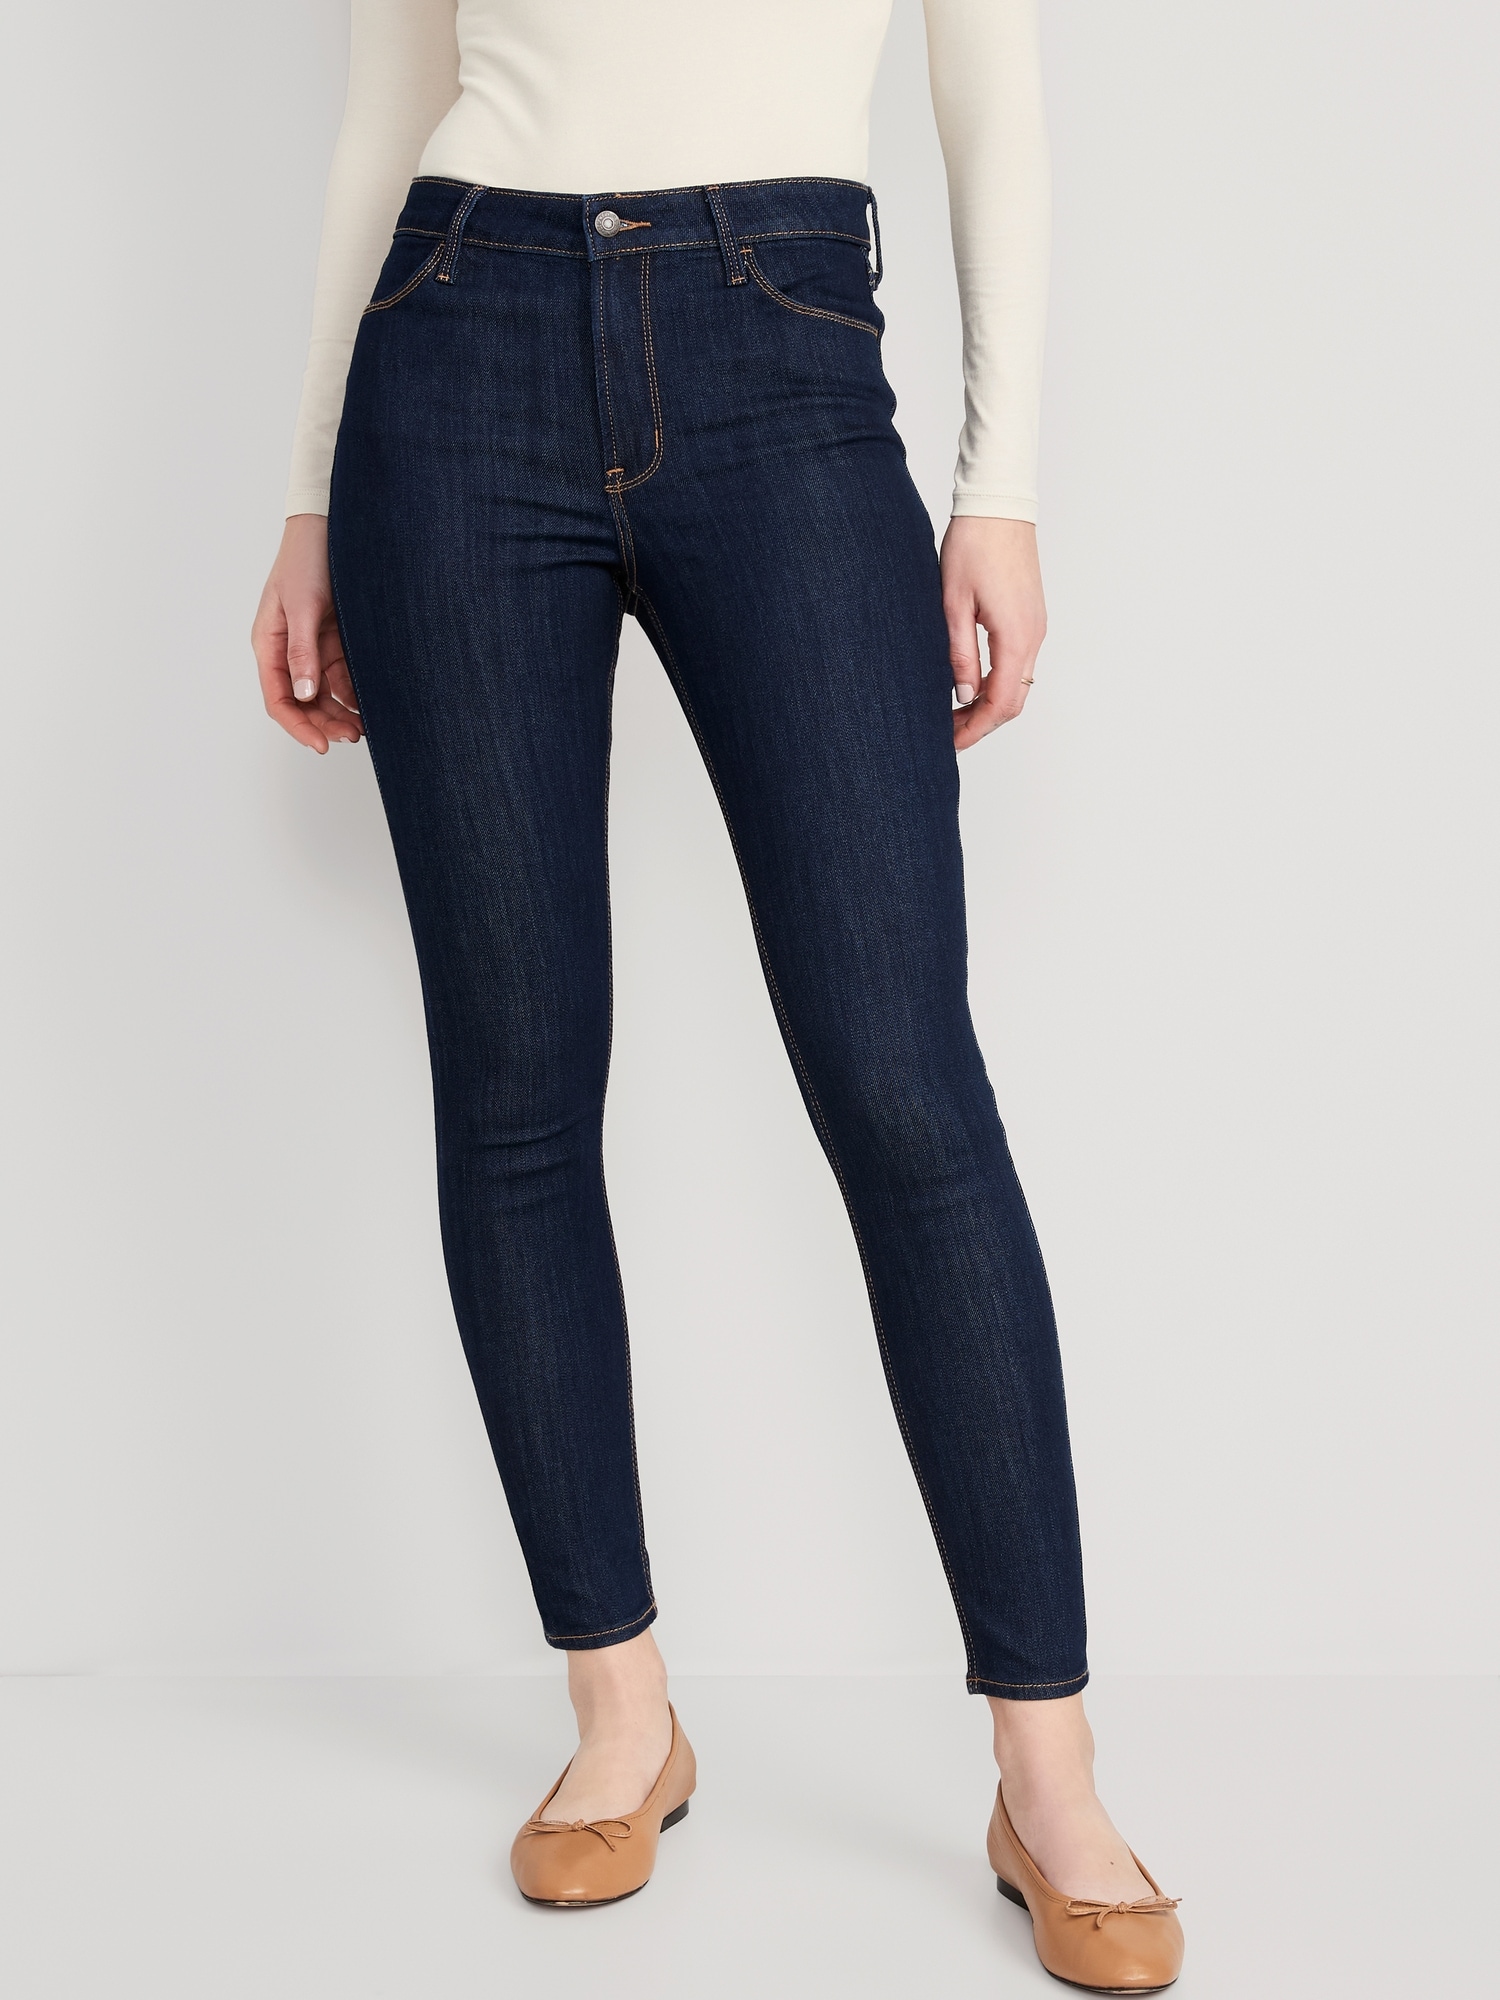 Buy DOLCE CRUDO Dark Wash Denim Skinny Fit Women's Jeans | Shoppers Stop